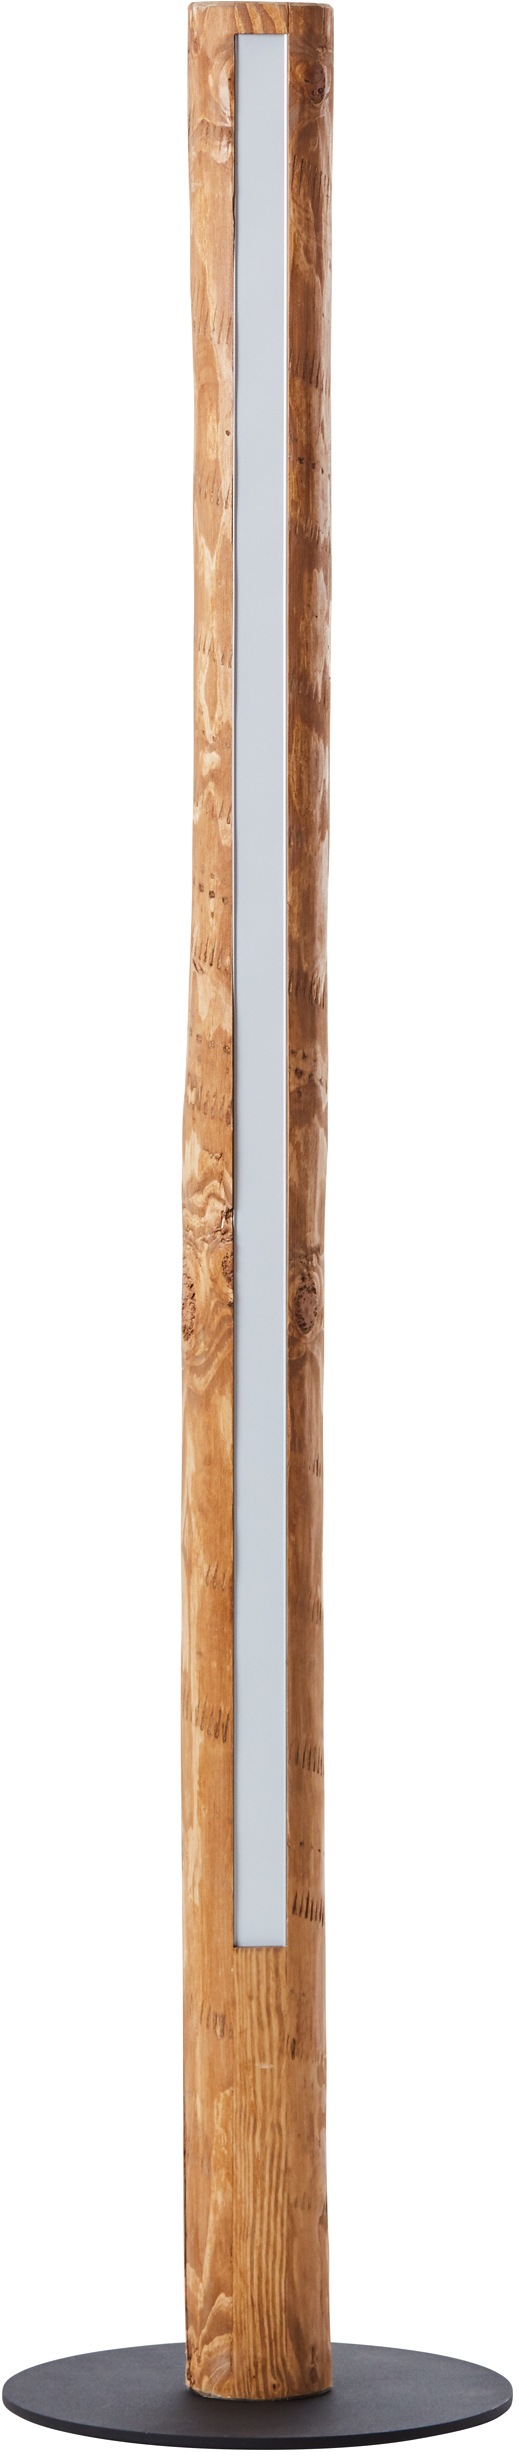 1 dimmbar, Stehlampe kiefer 141 »Odun«, gebeizt Brilliant H lm, warmweiß, BAUR 2900 Holz/Metall, flammig-flammig, cm, LED |